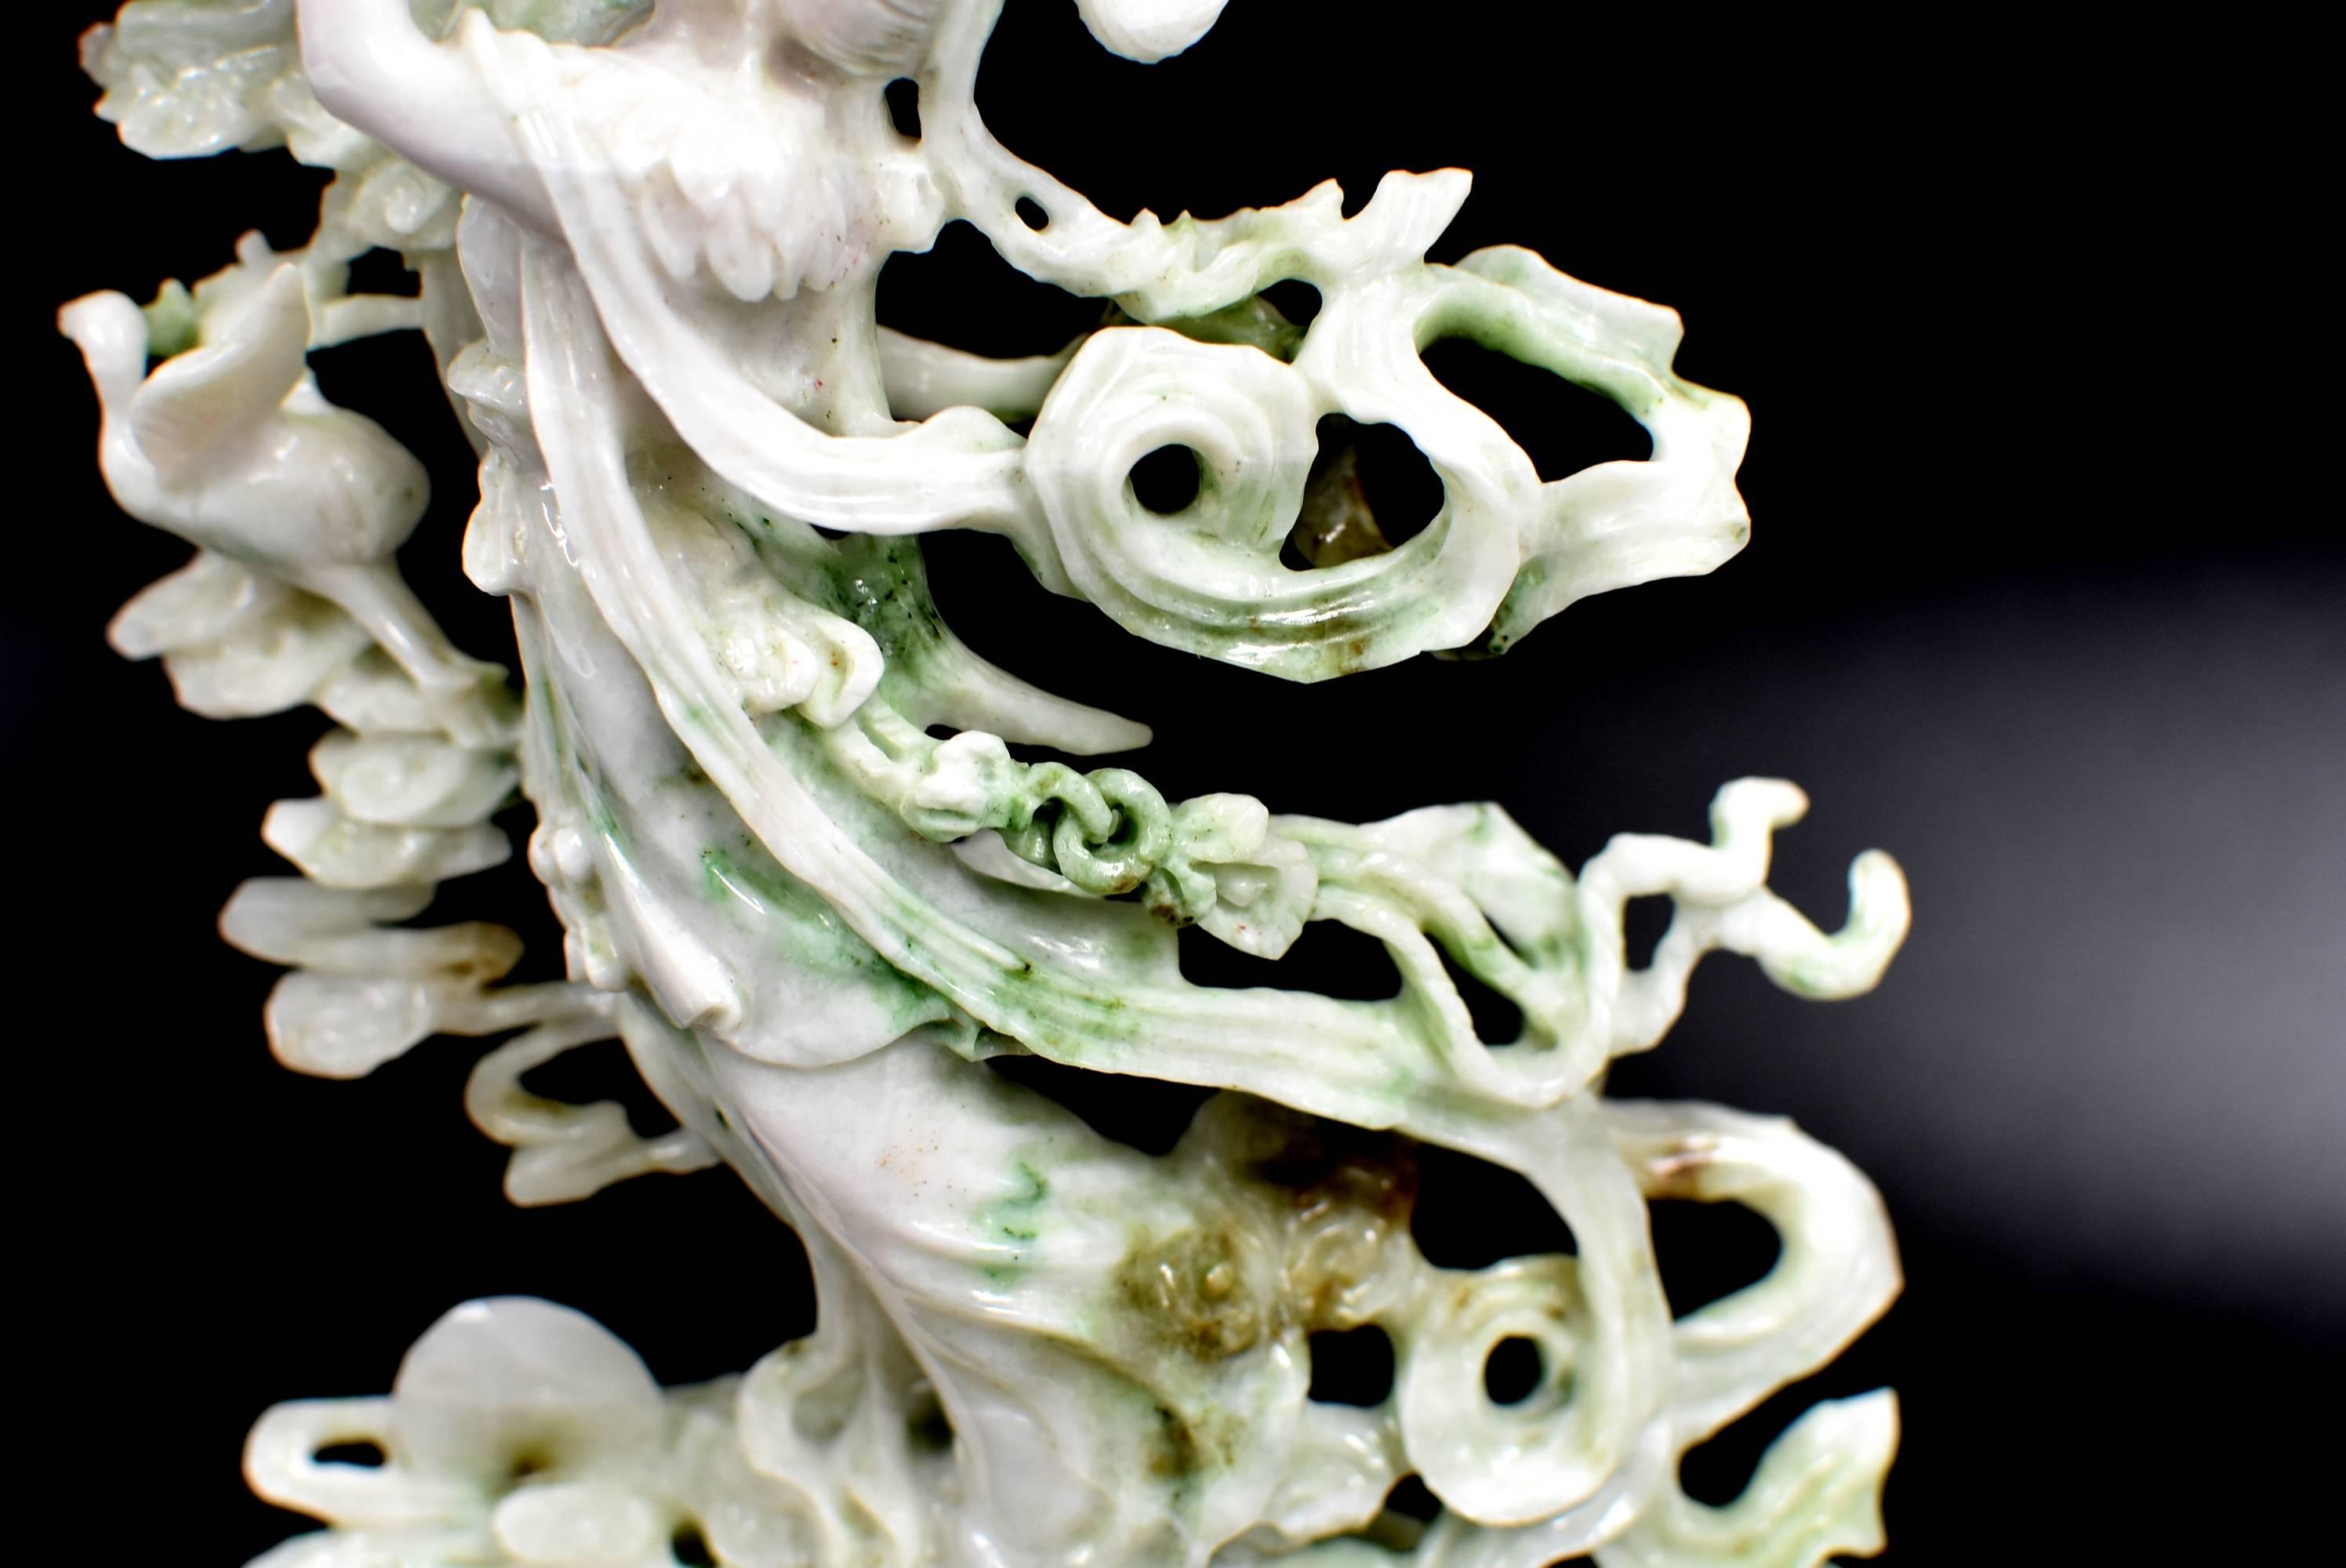 jade sculpture for sale